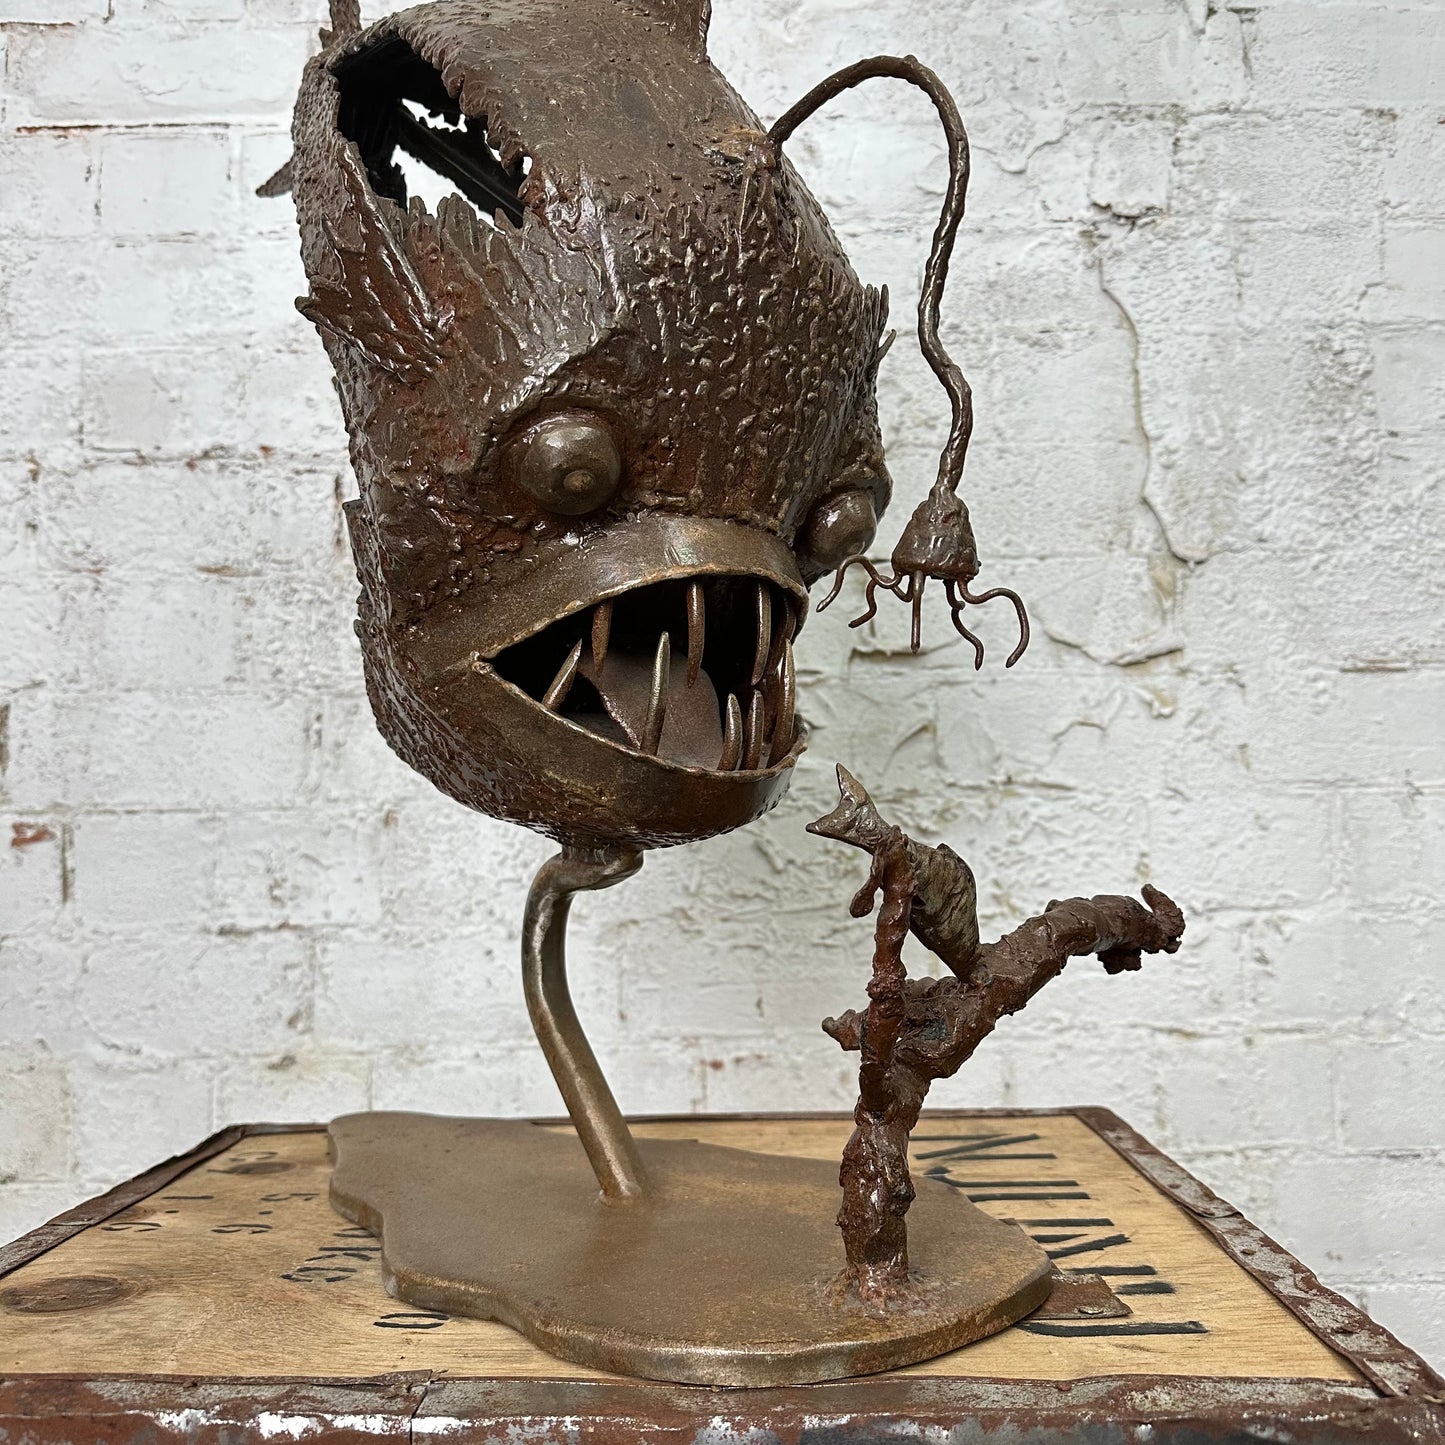 Handmade Fabricated Metal Angler Fish Sculpture